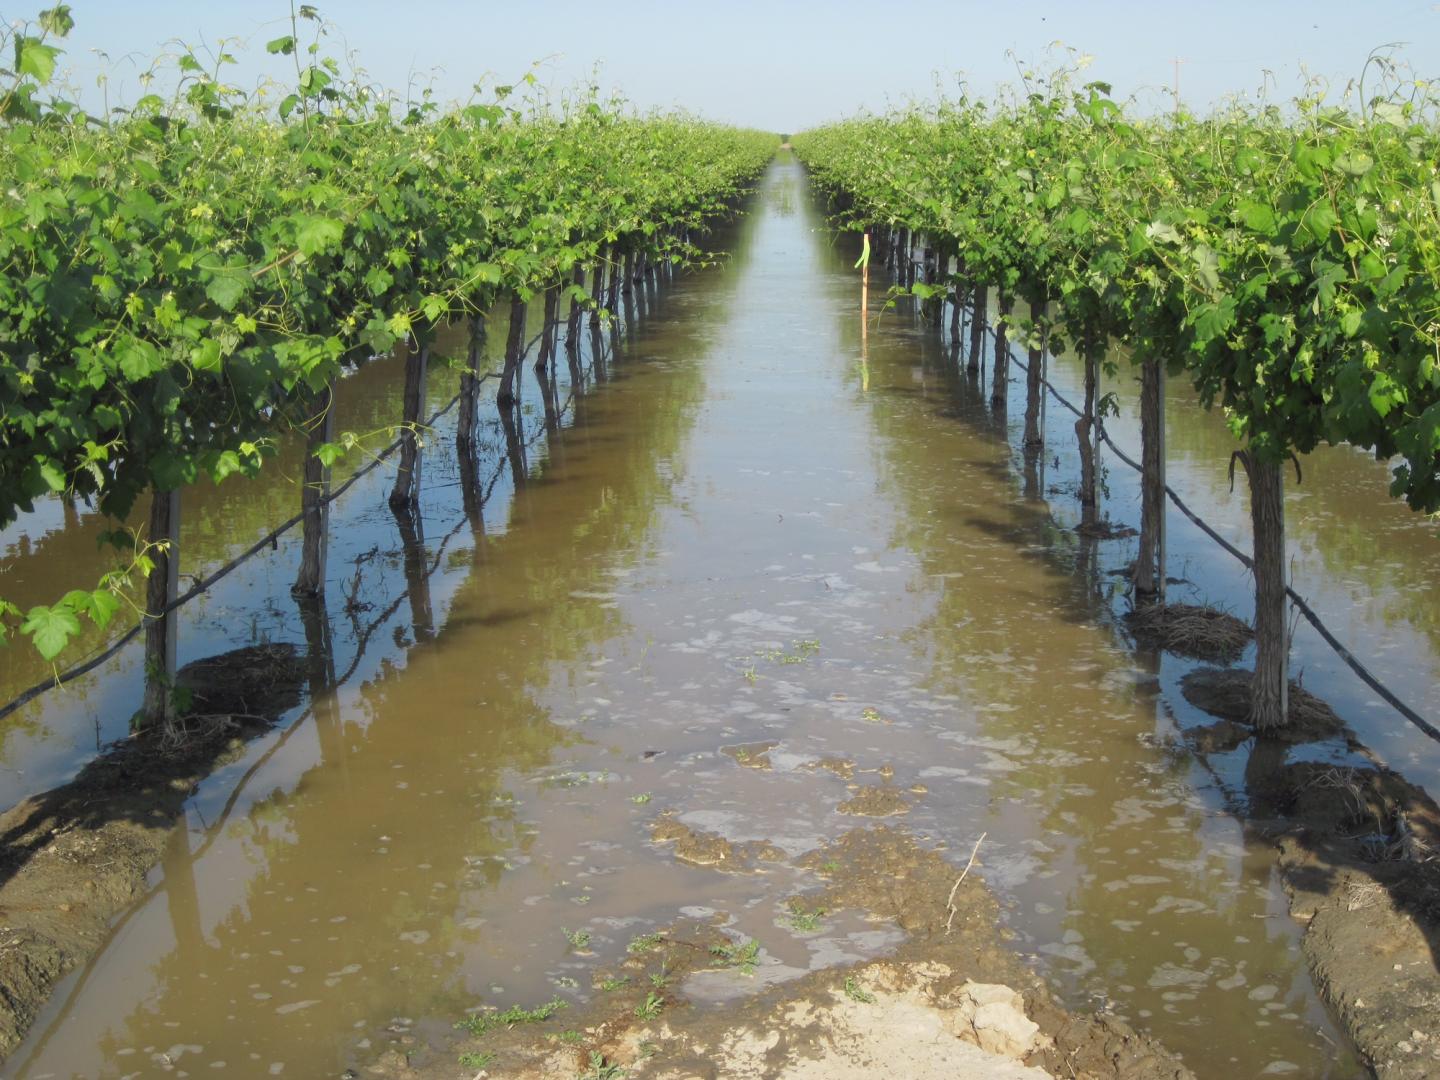 Flooded vineyards